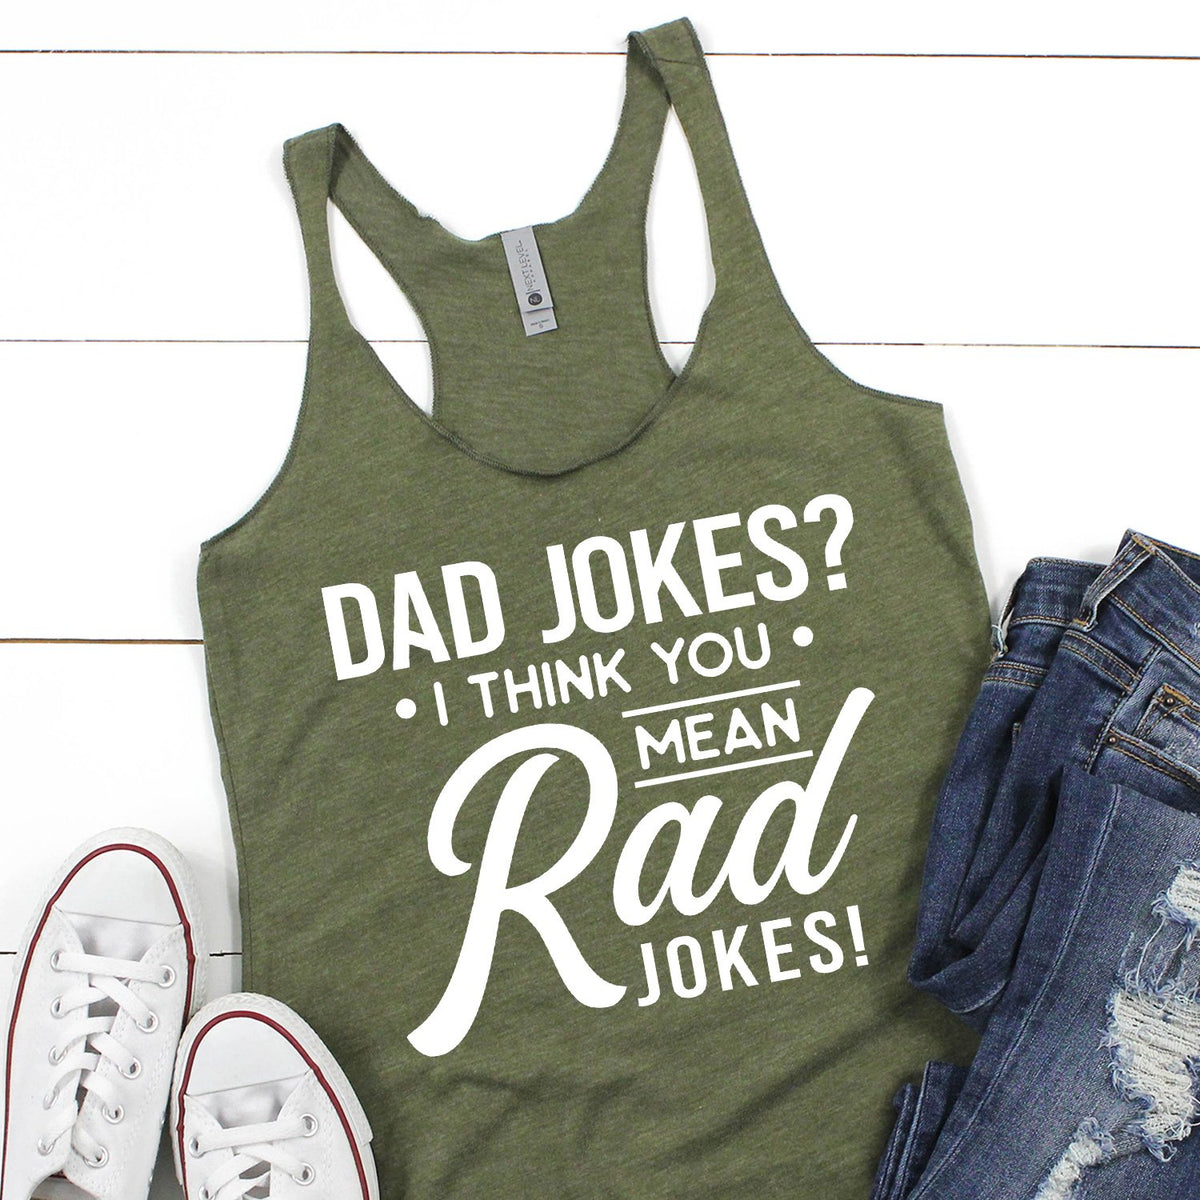 Dad Jokes? I Think You Mean Rad Jokes - Tank Top Racerback